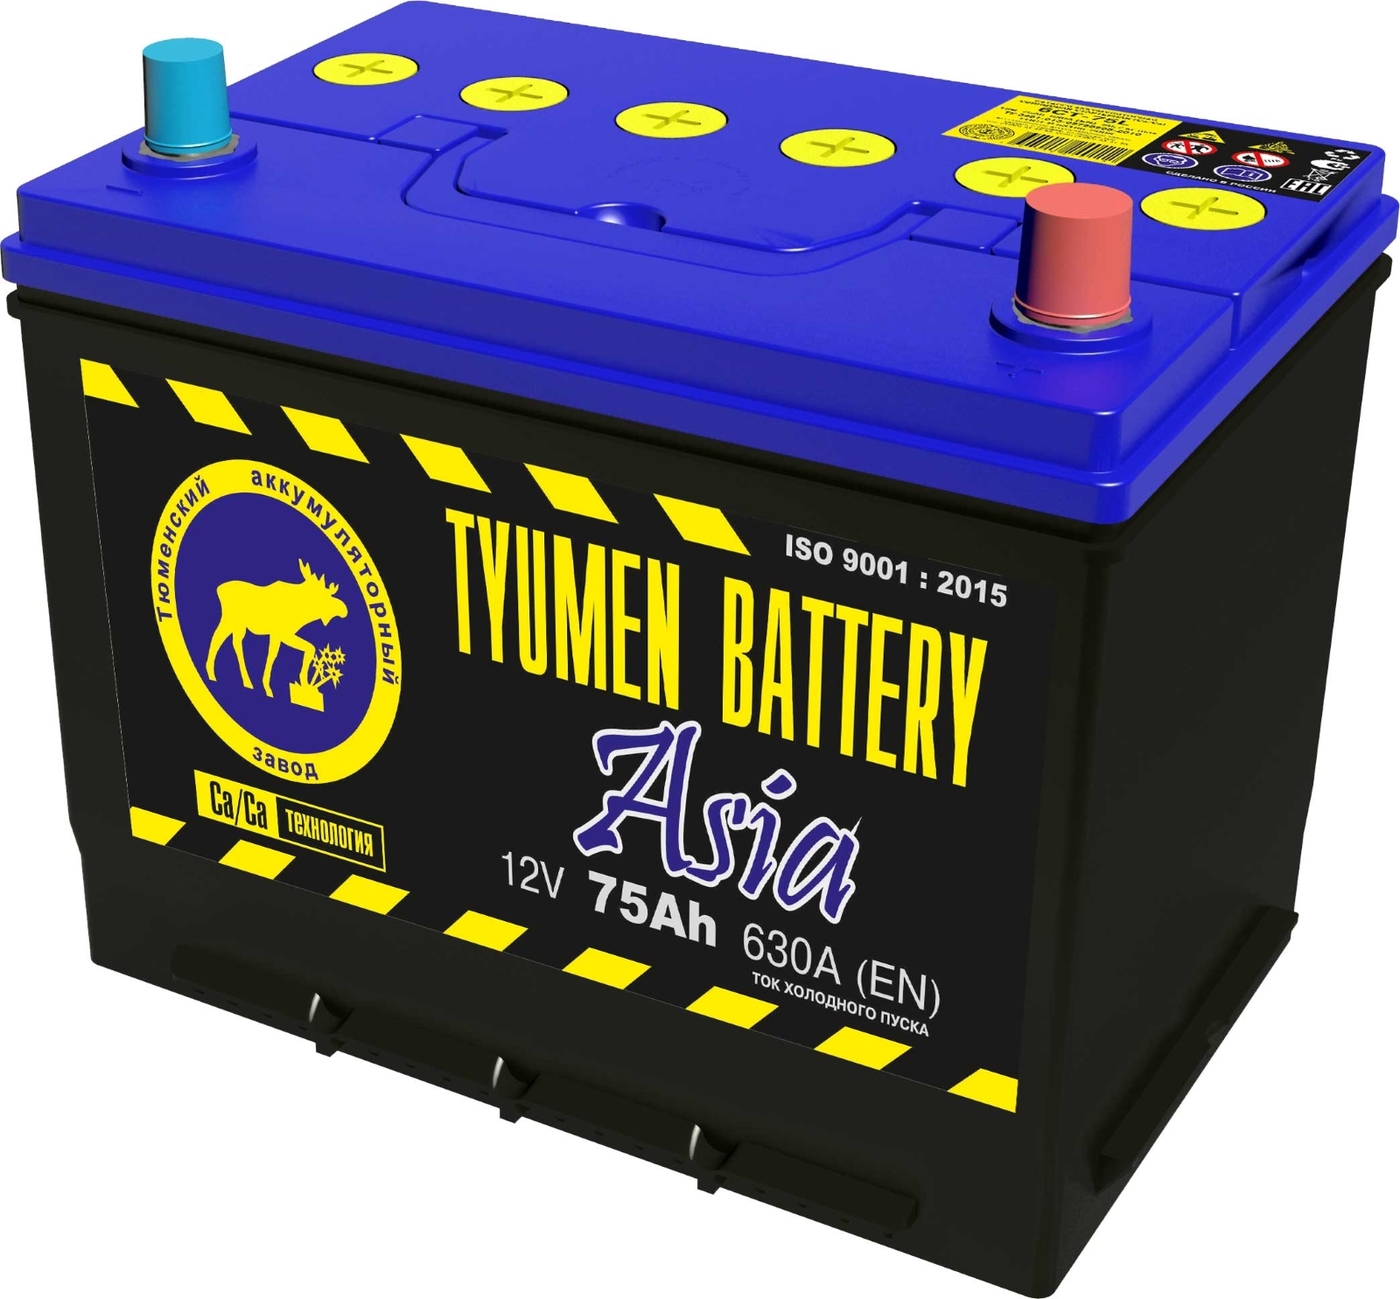  автомобильный Tyumen Battery 6CT-75L STANDARD, 75 Ач  .